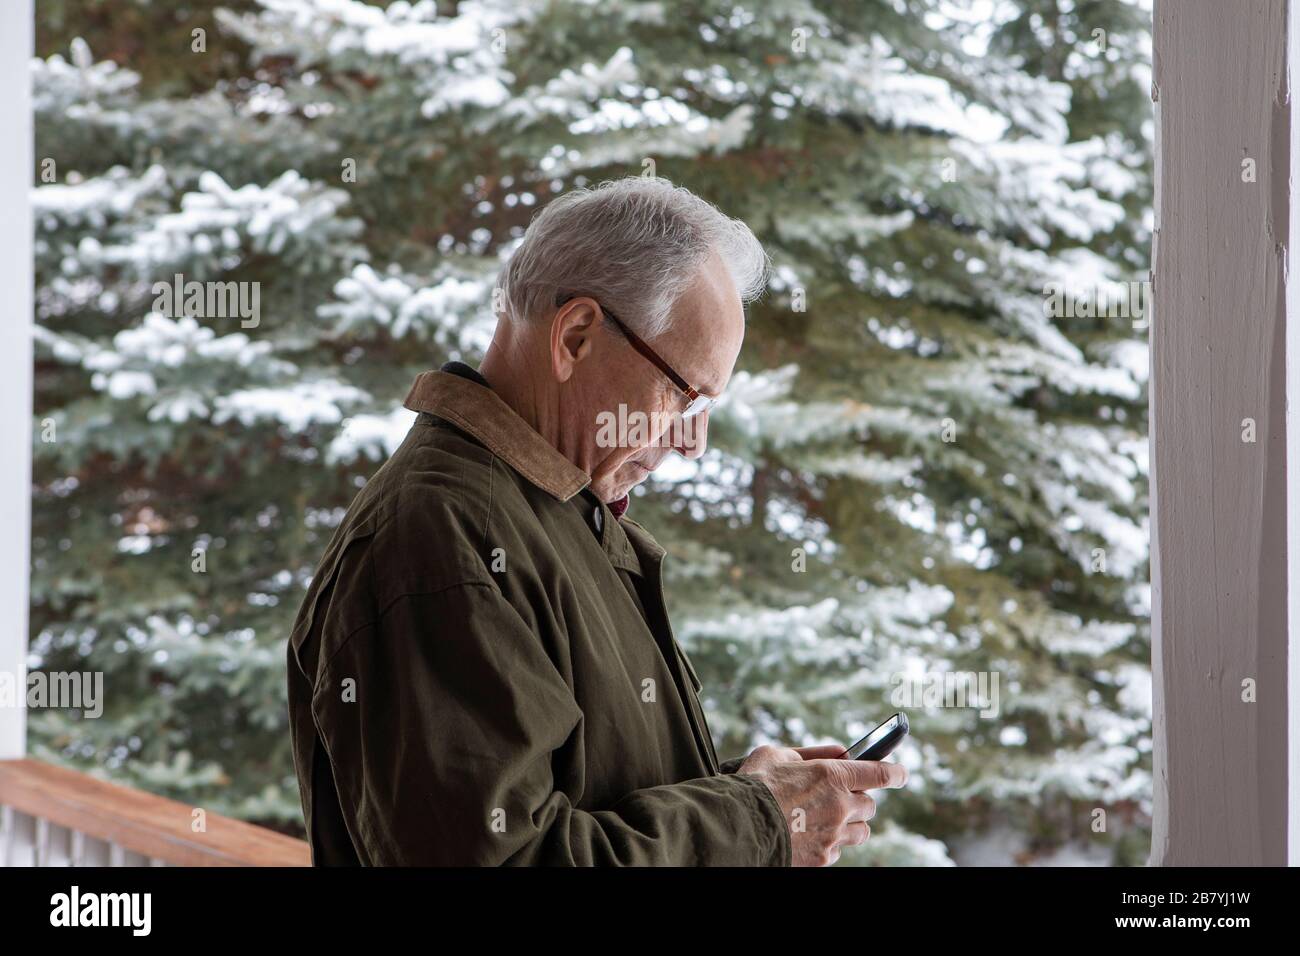 Senior man using smart phone by snowy tree Stock Photo